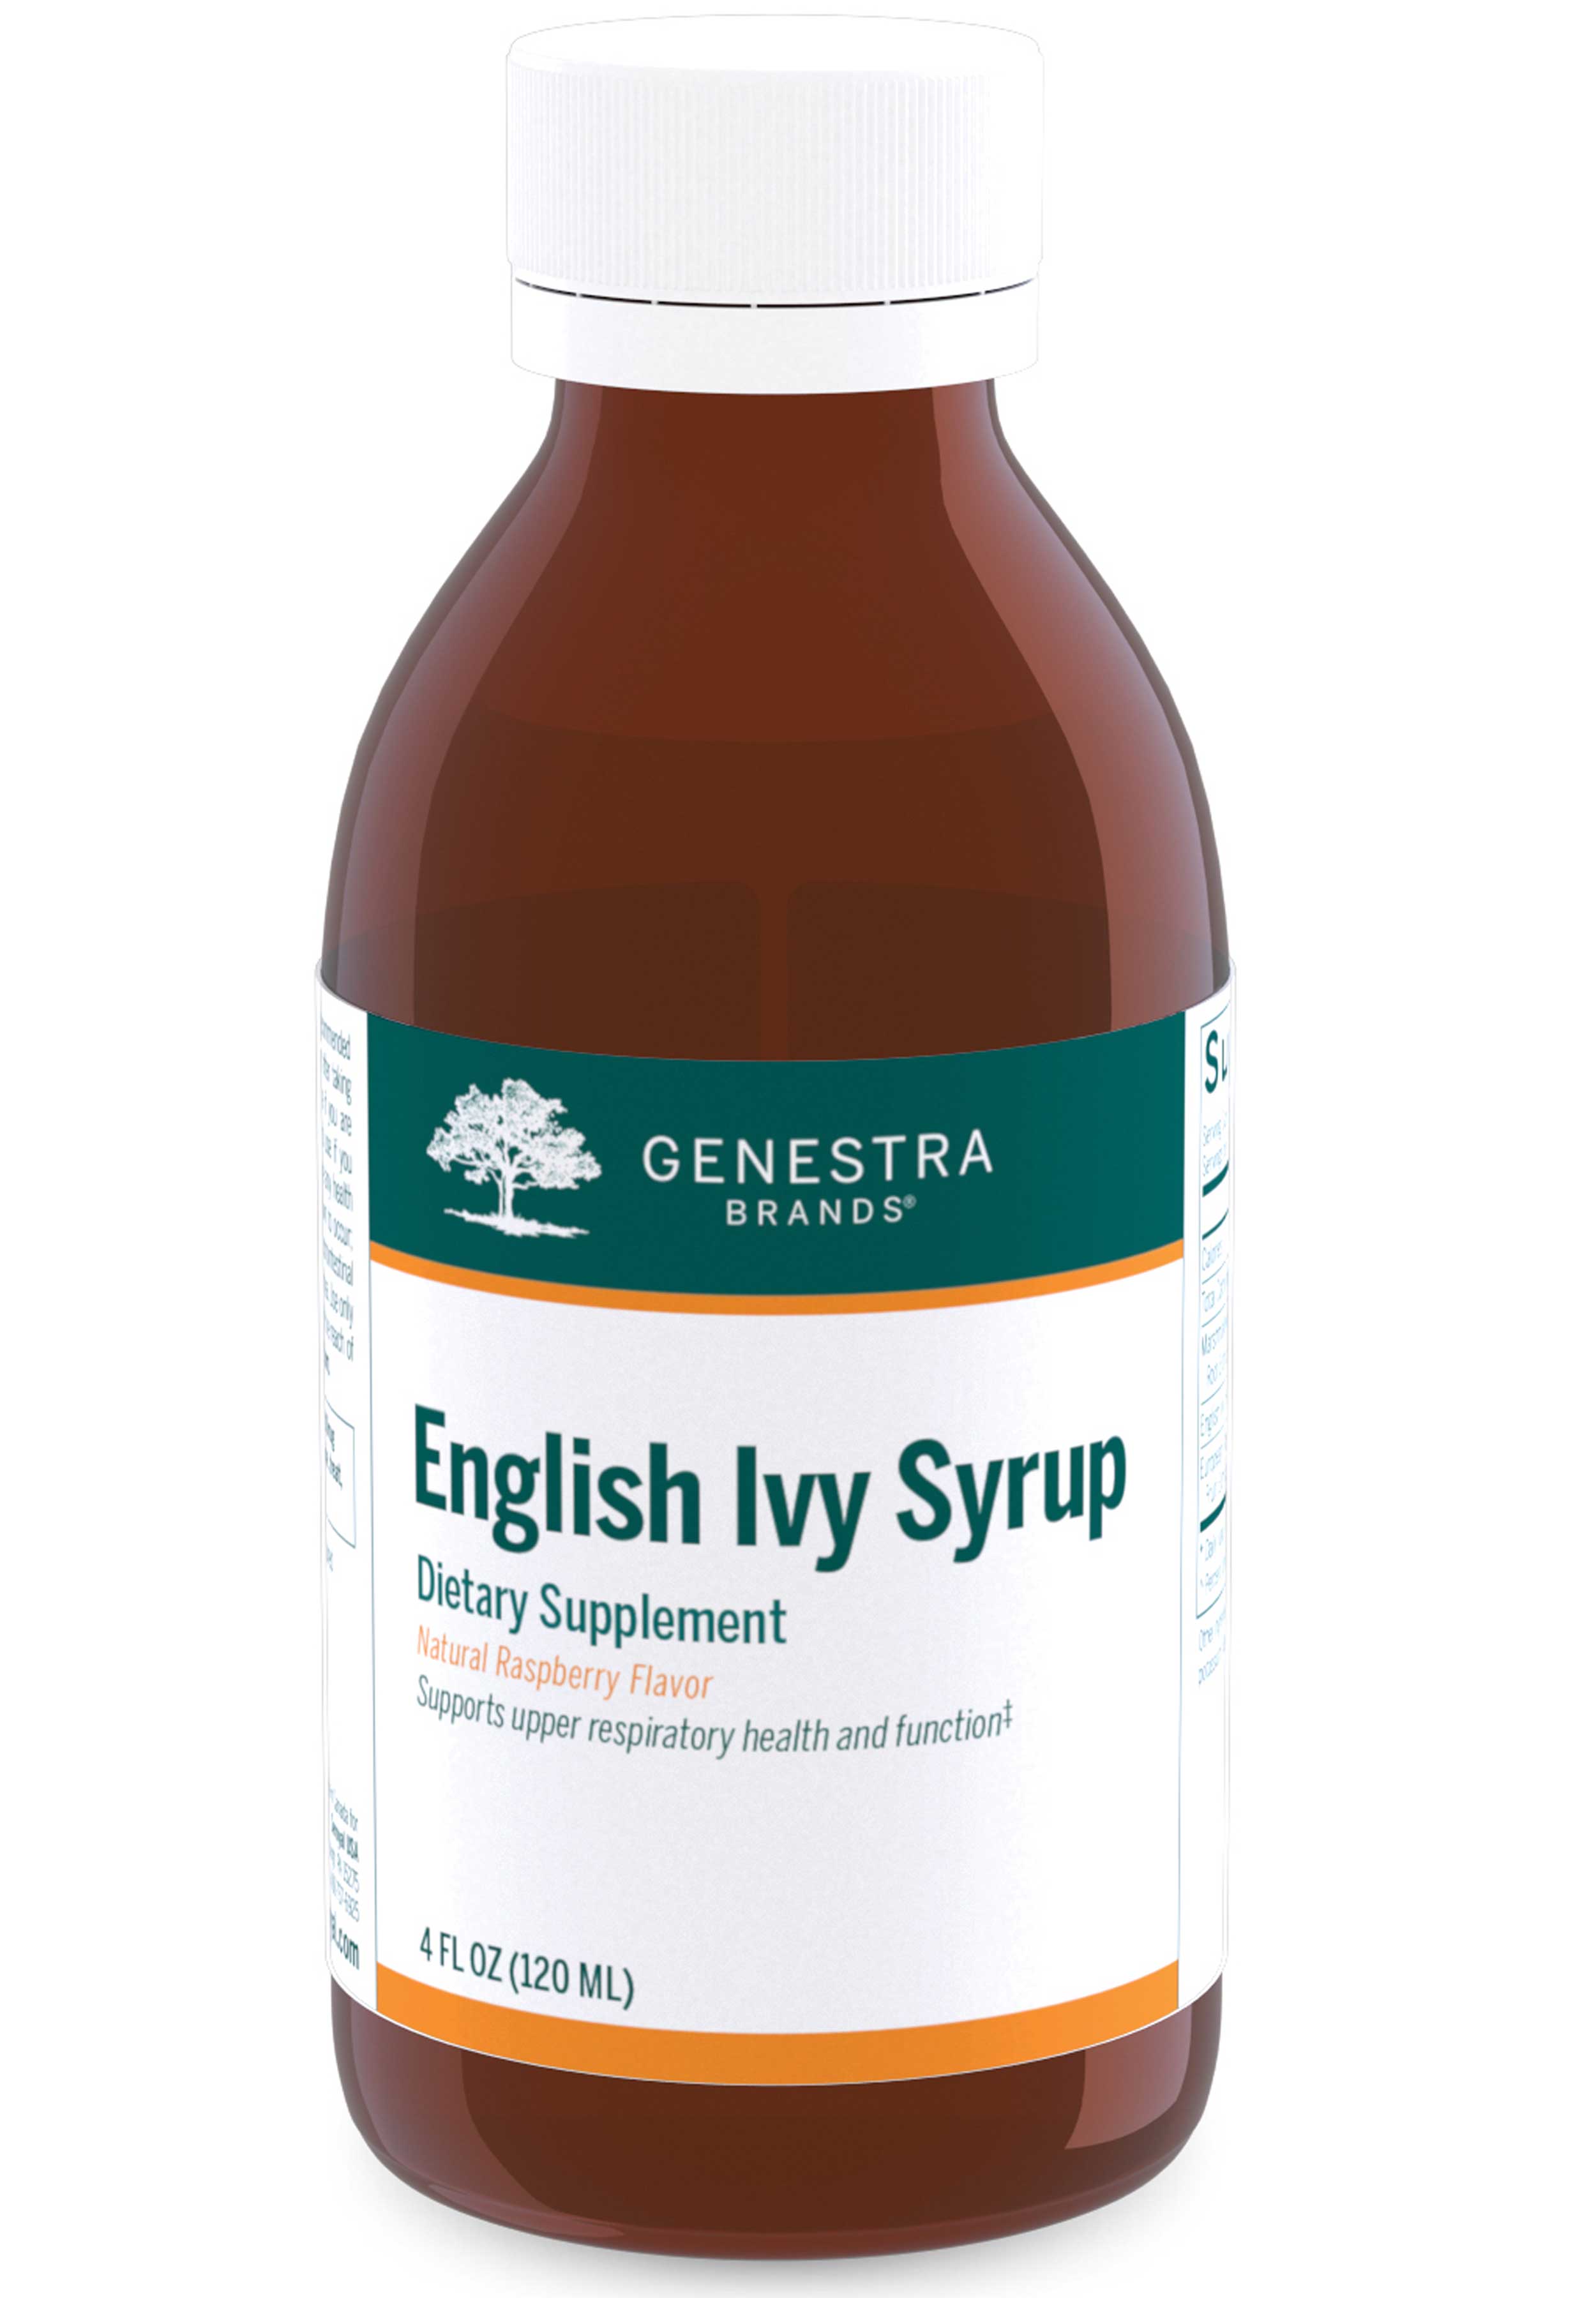 Genestra Brands English Ivy Syrup